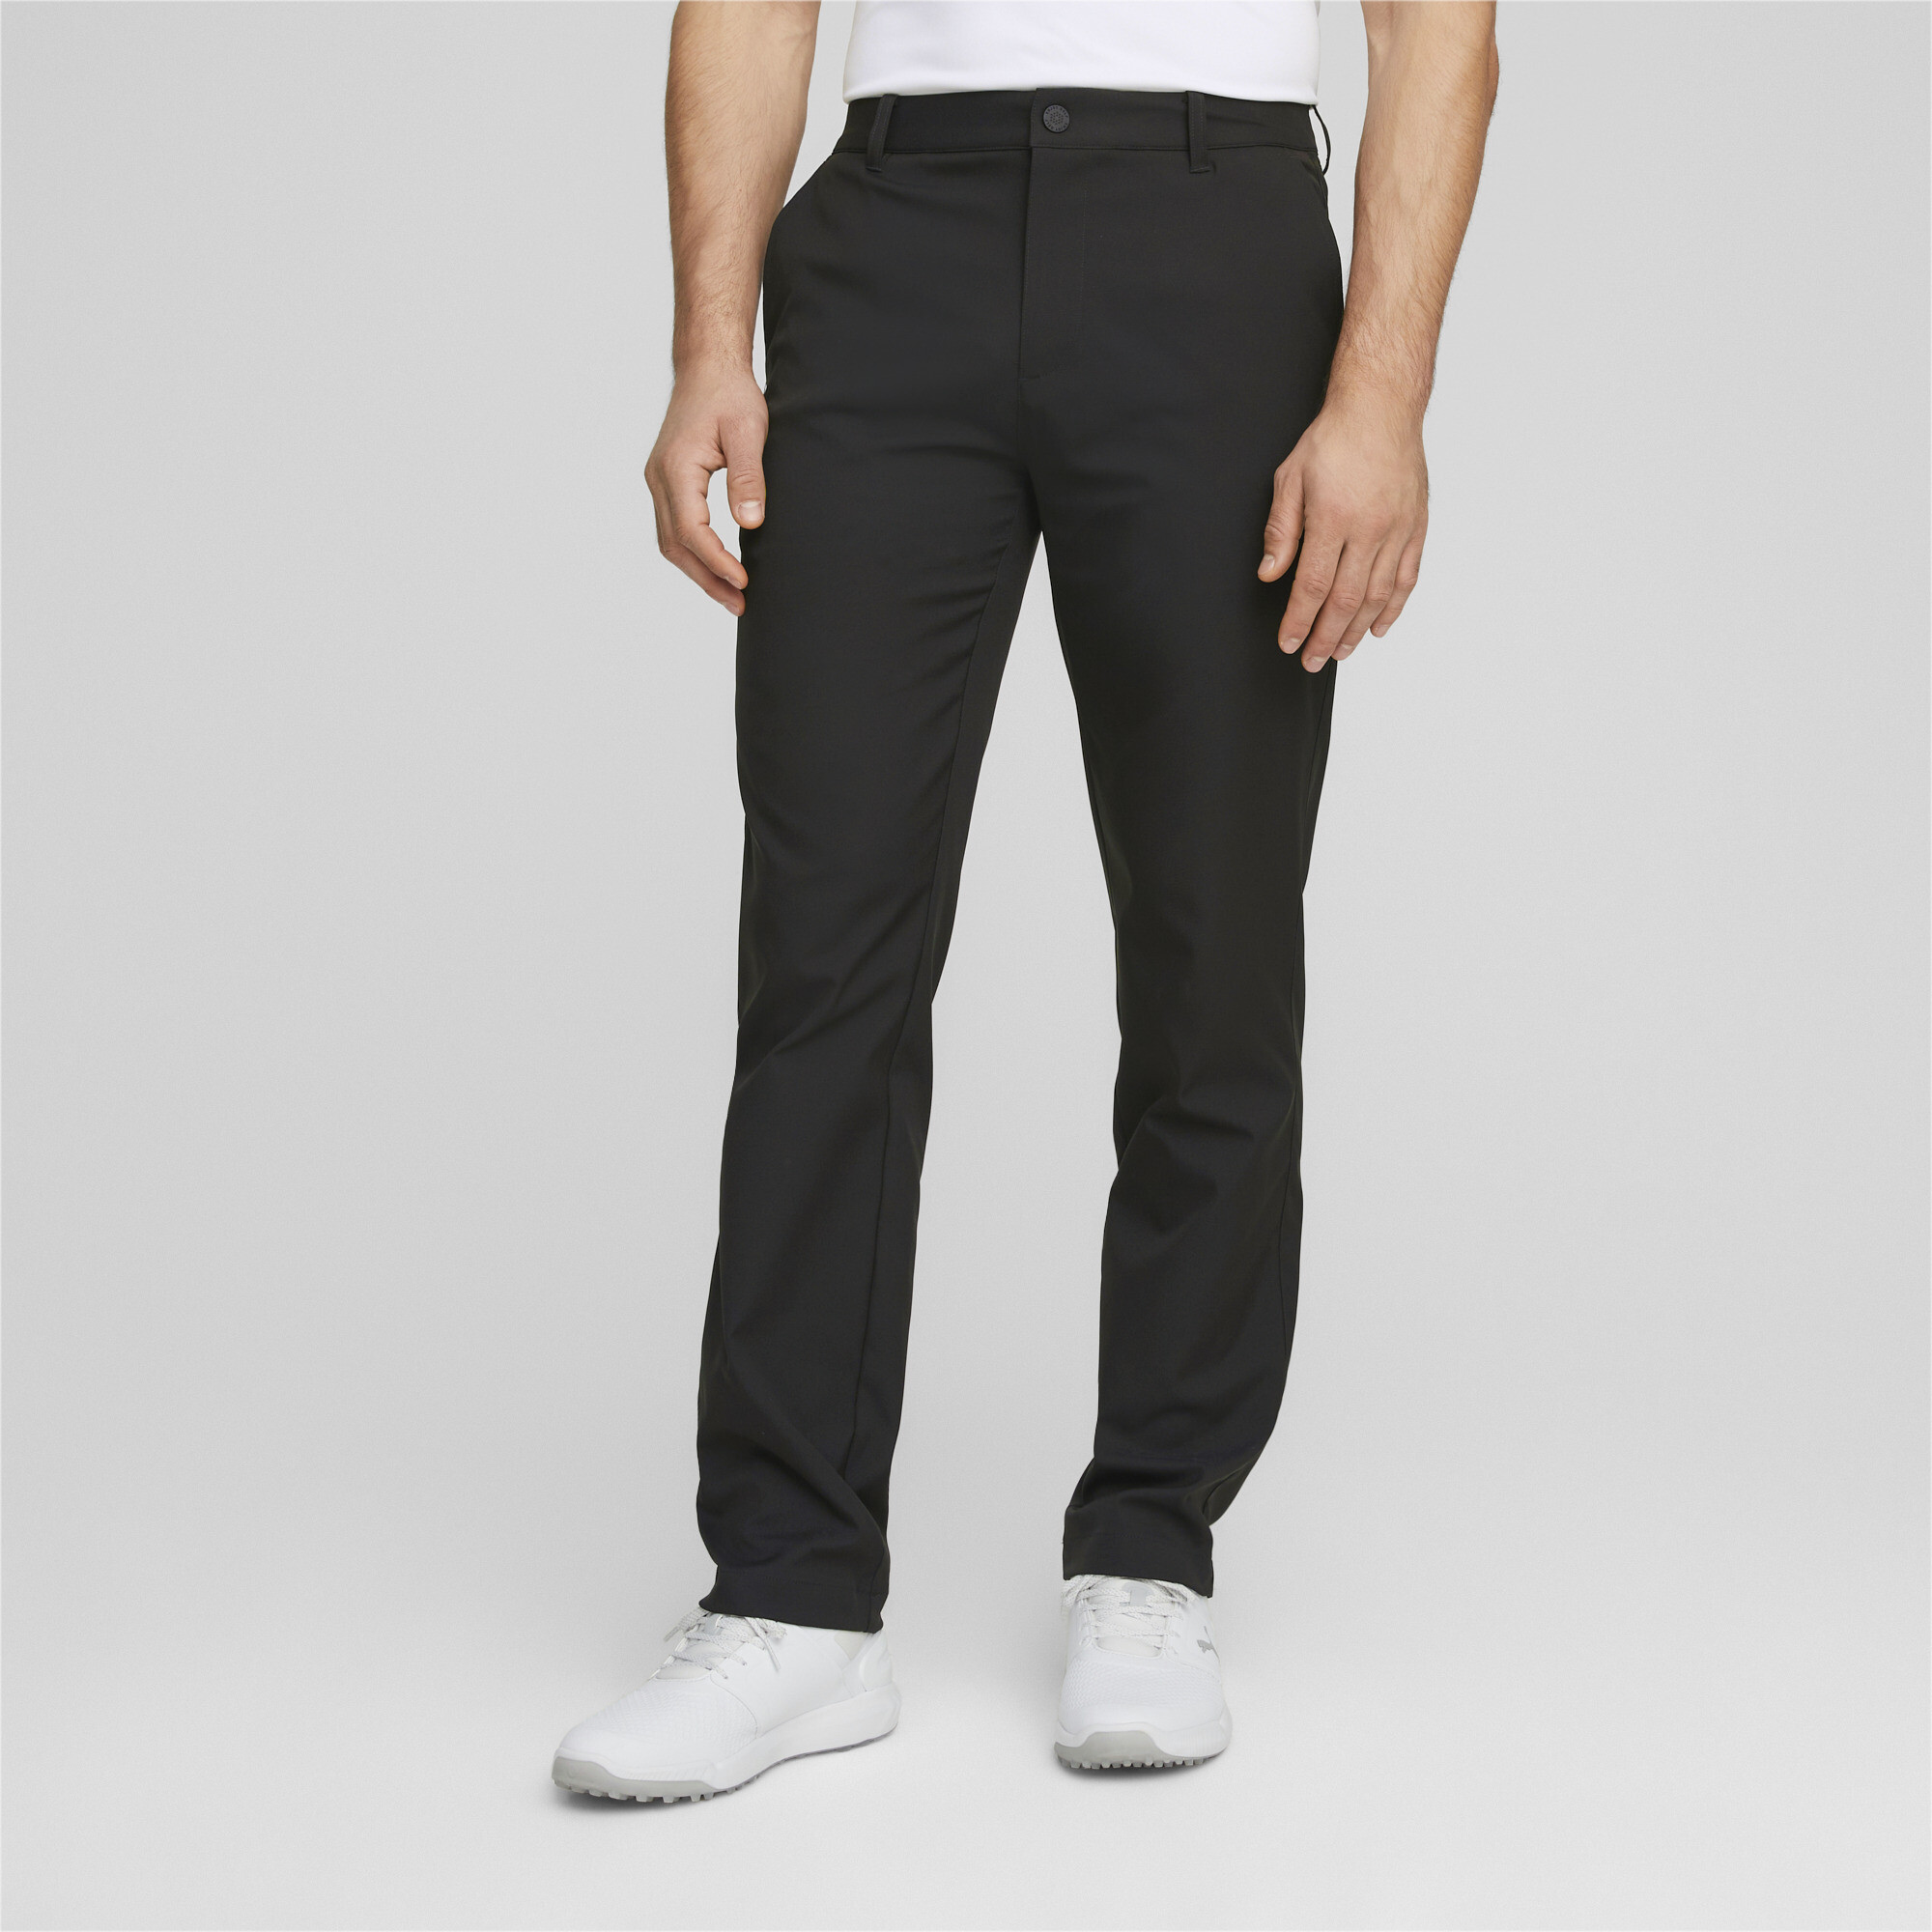 Men's Puma Dealer Golf Pants, Black, Size 40/36, Clothing